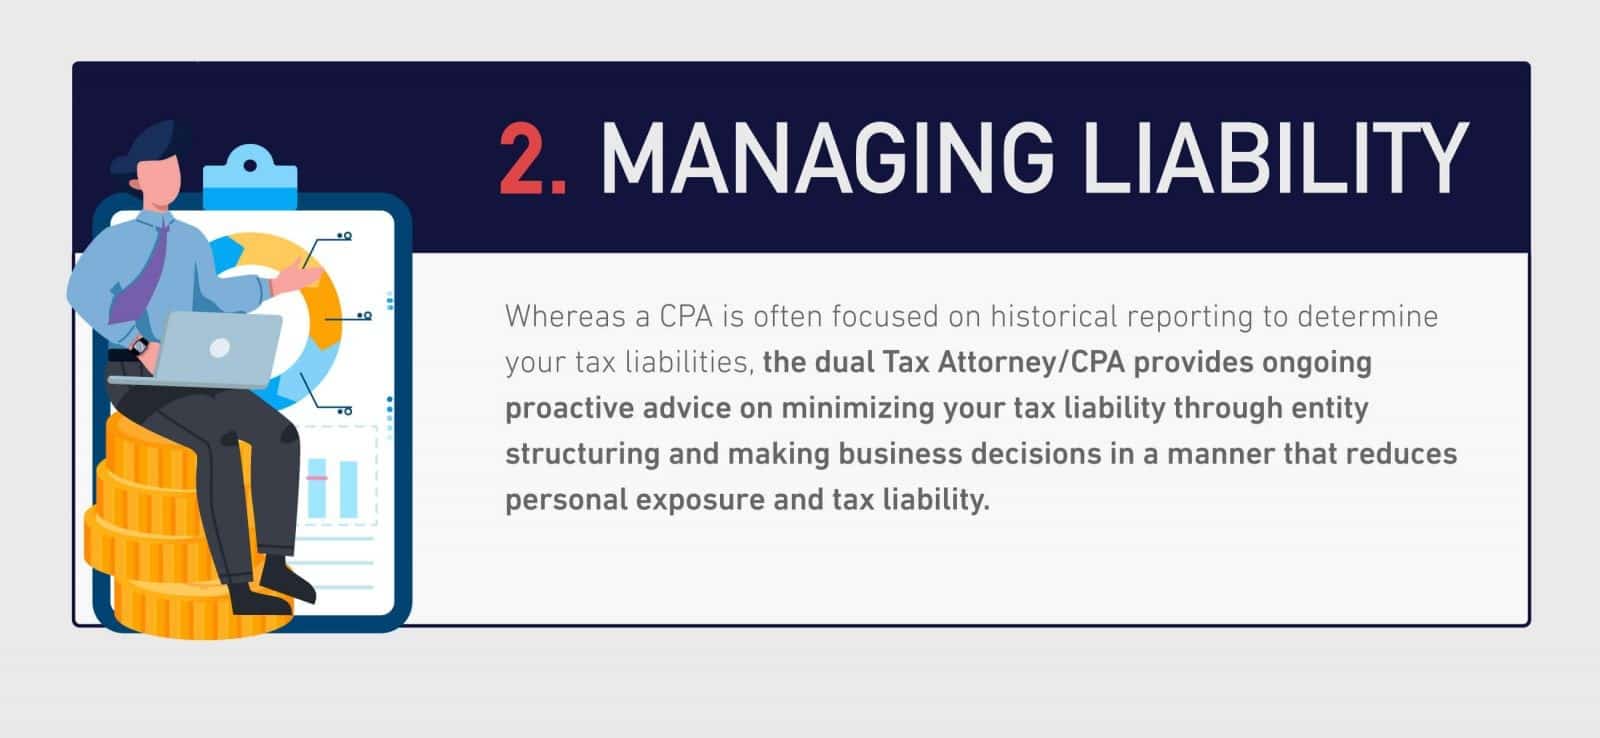 Managing-liability-klasing-associates-oakland-tax-attorney